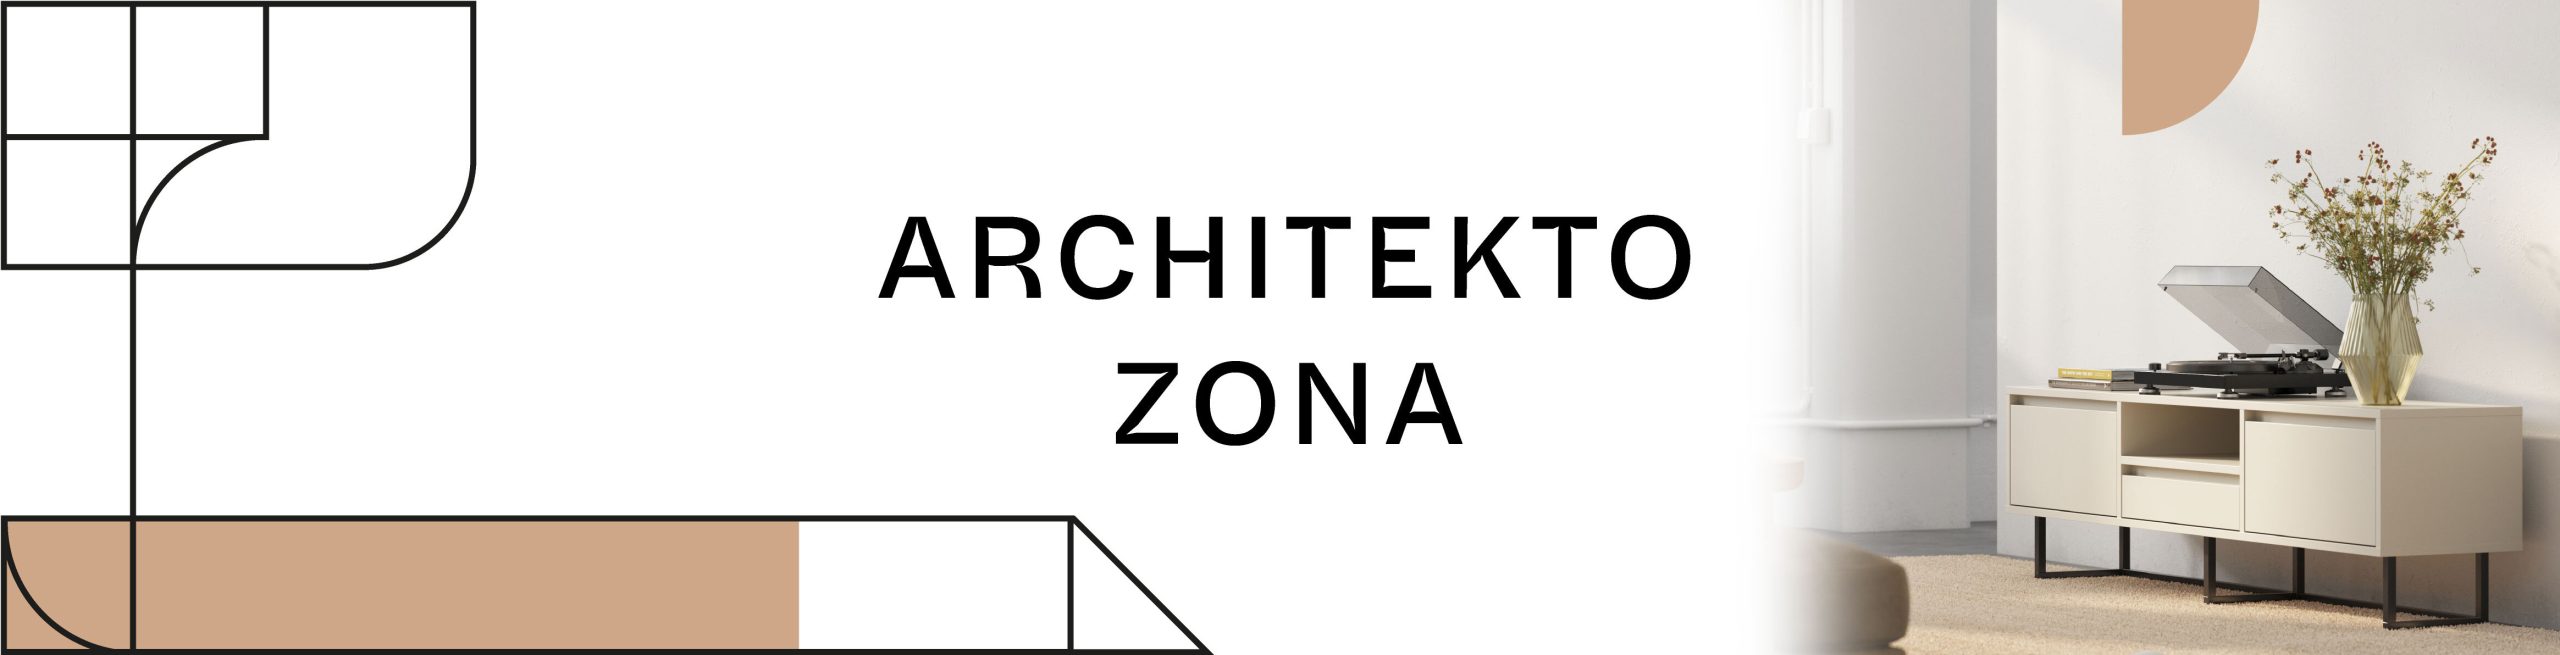 strefa architekta baner na strone litewski 1